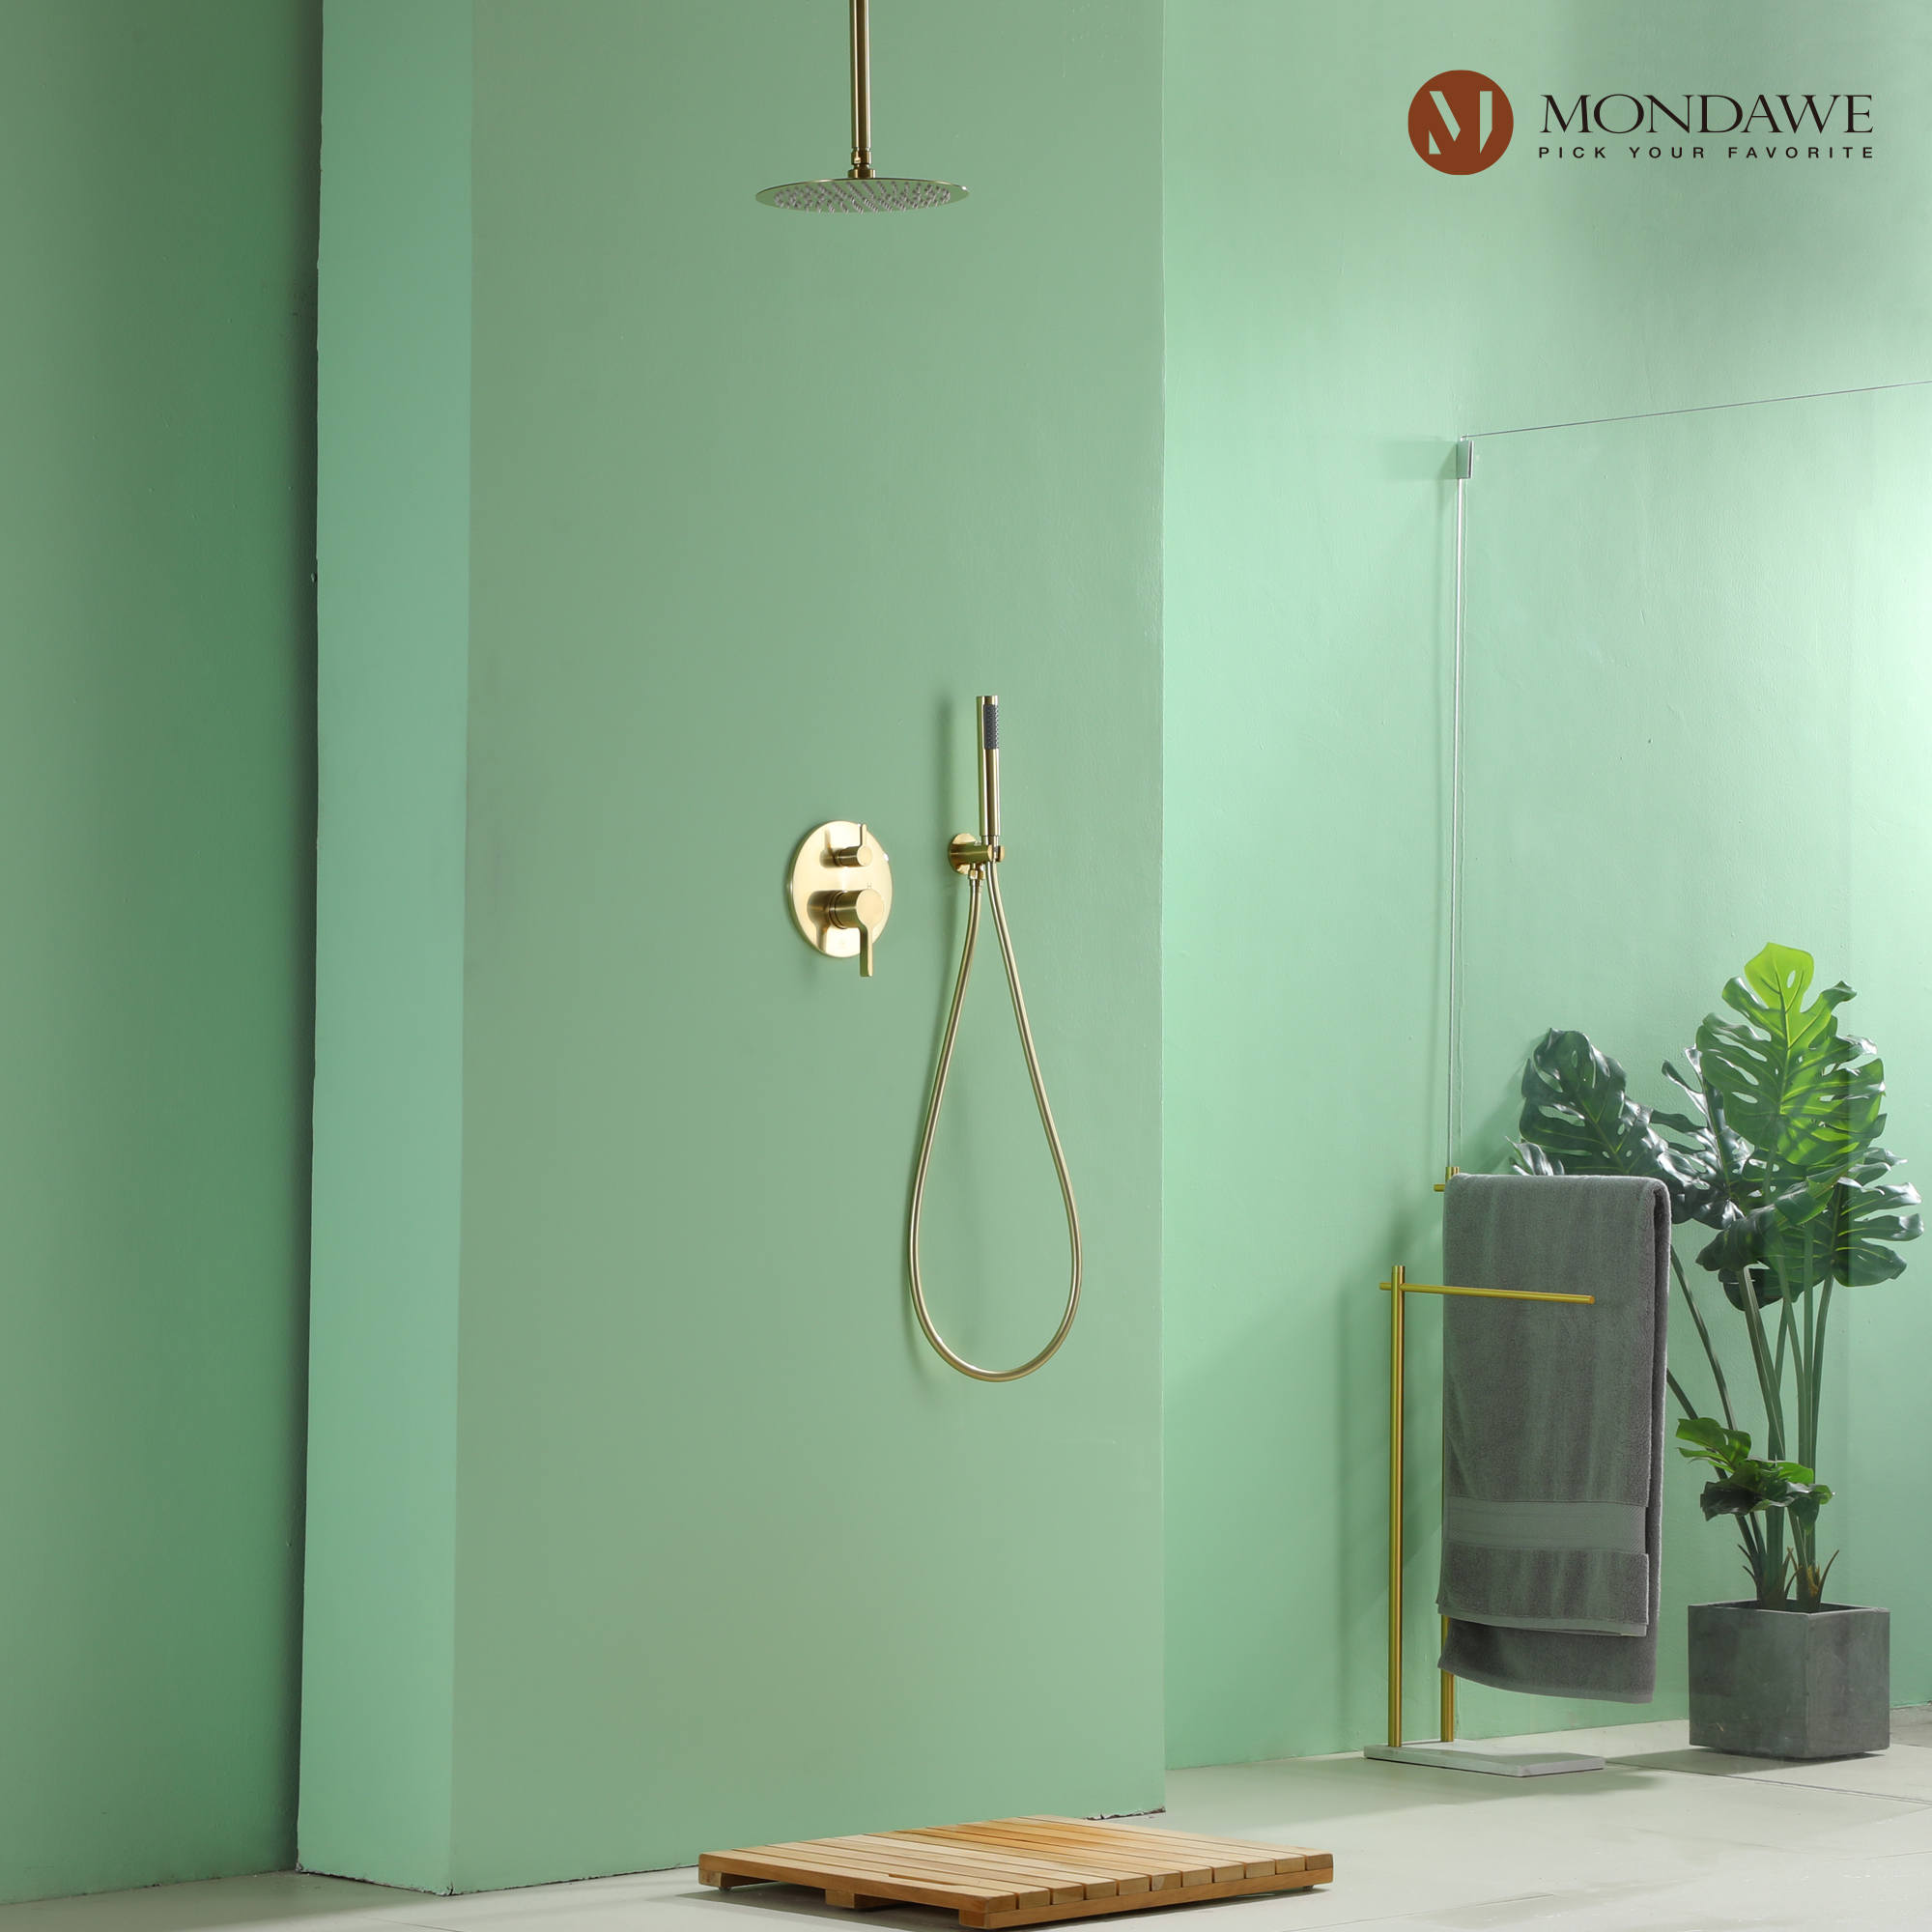 Mondawe 10 Inch Round Bathroom Shower Set in Nickel/Chrome/Black/Gold/Gun Black-Mondawe